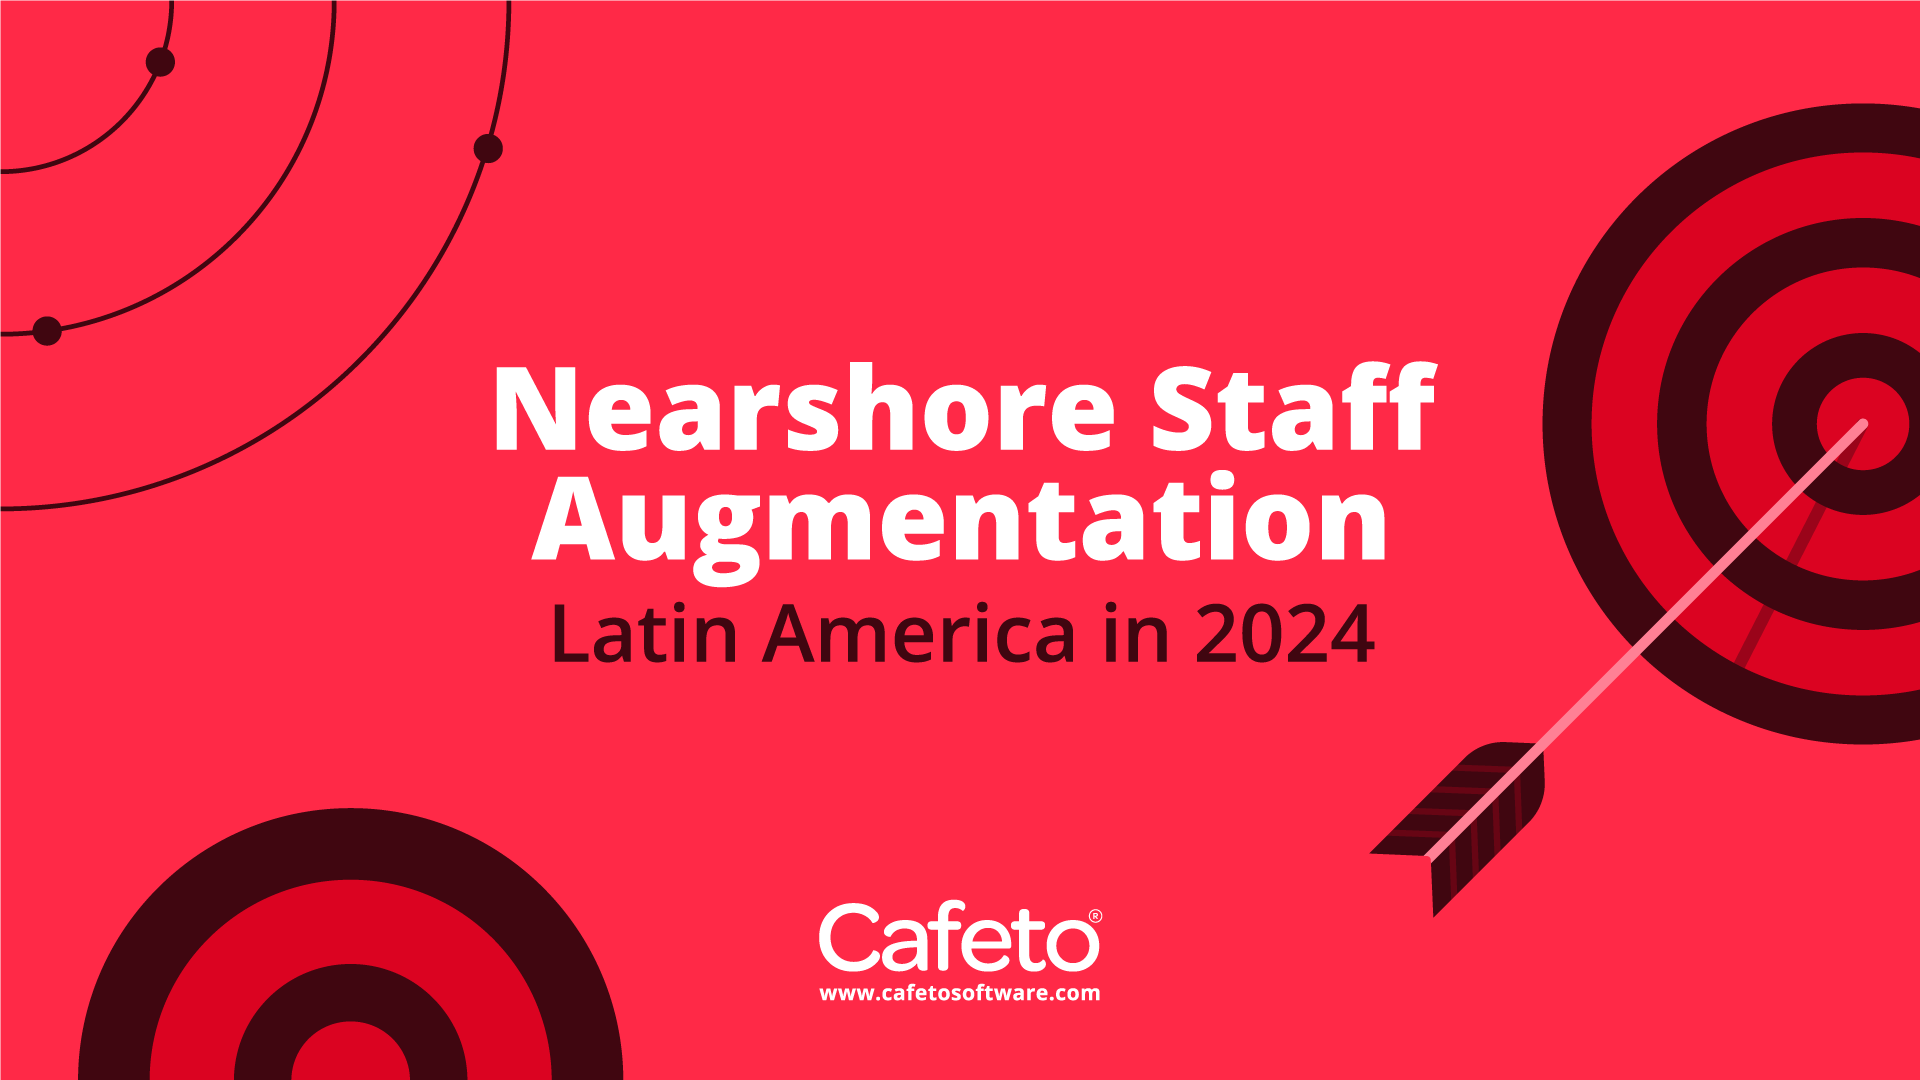 Nearshore Staff augmentation Latin America in 2024